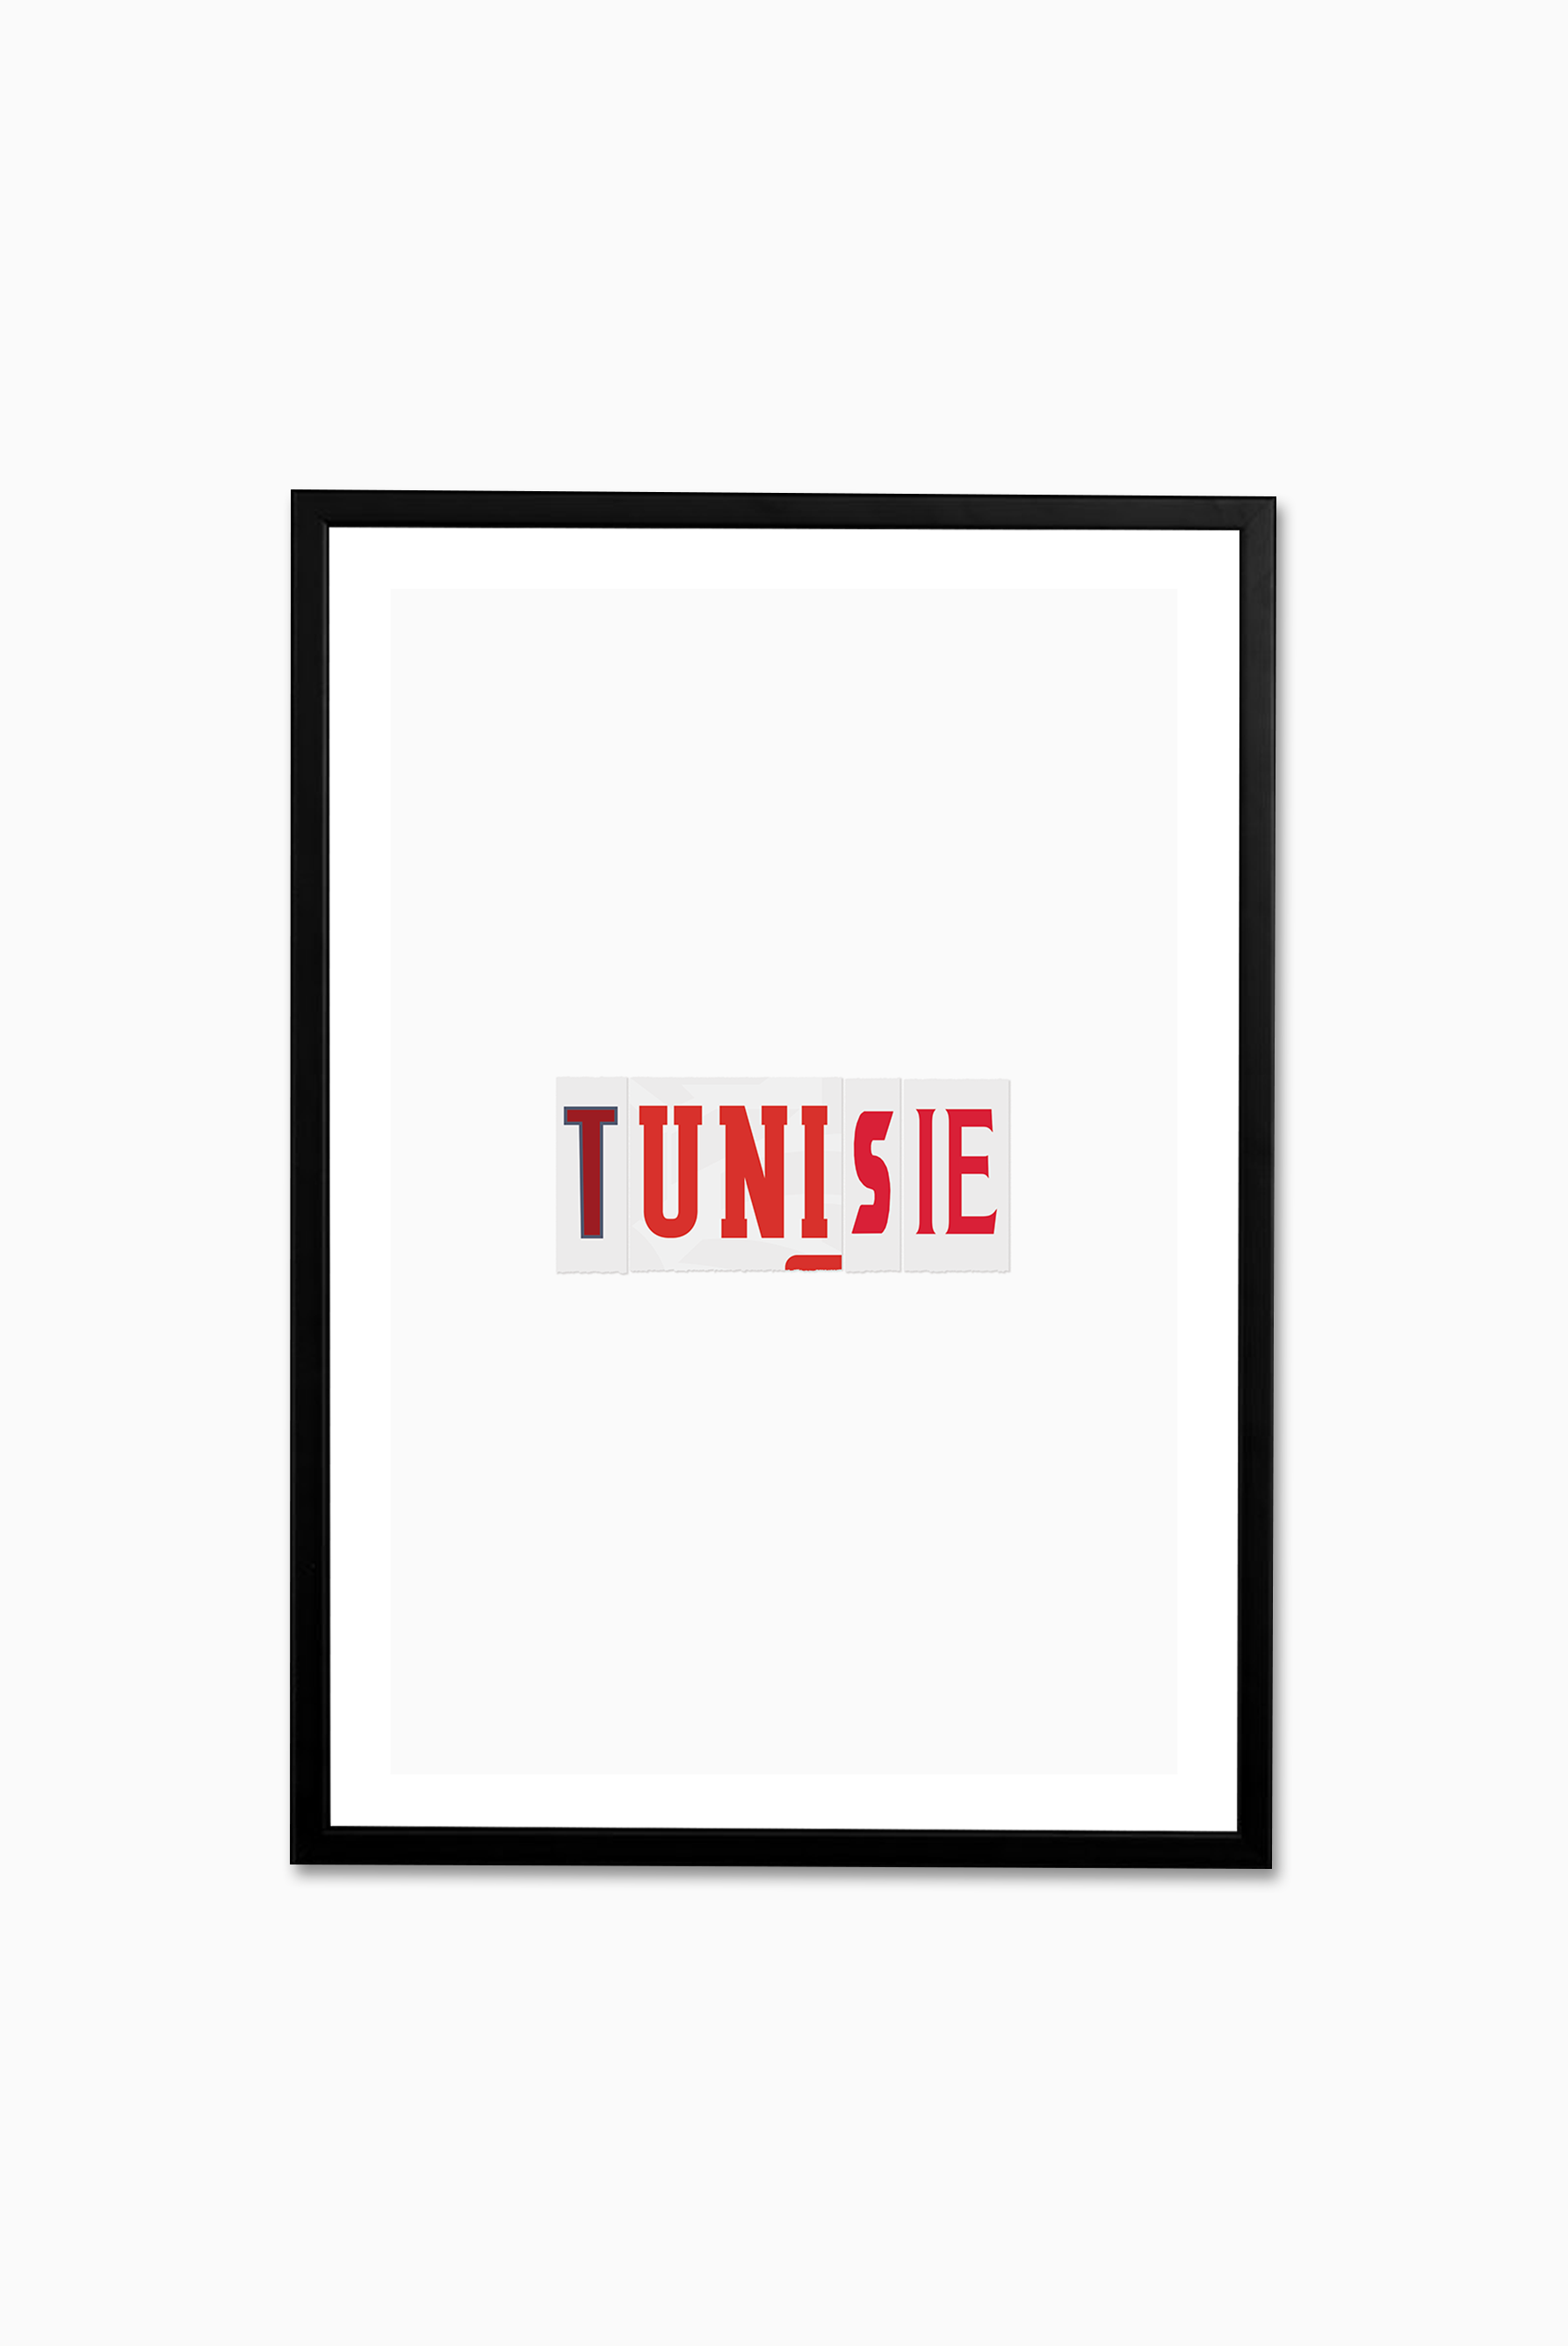 Tunisia Wear and Tear / Print